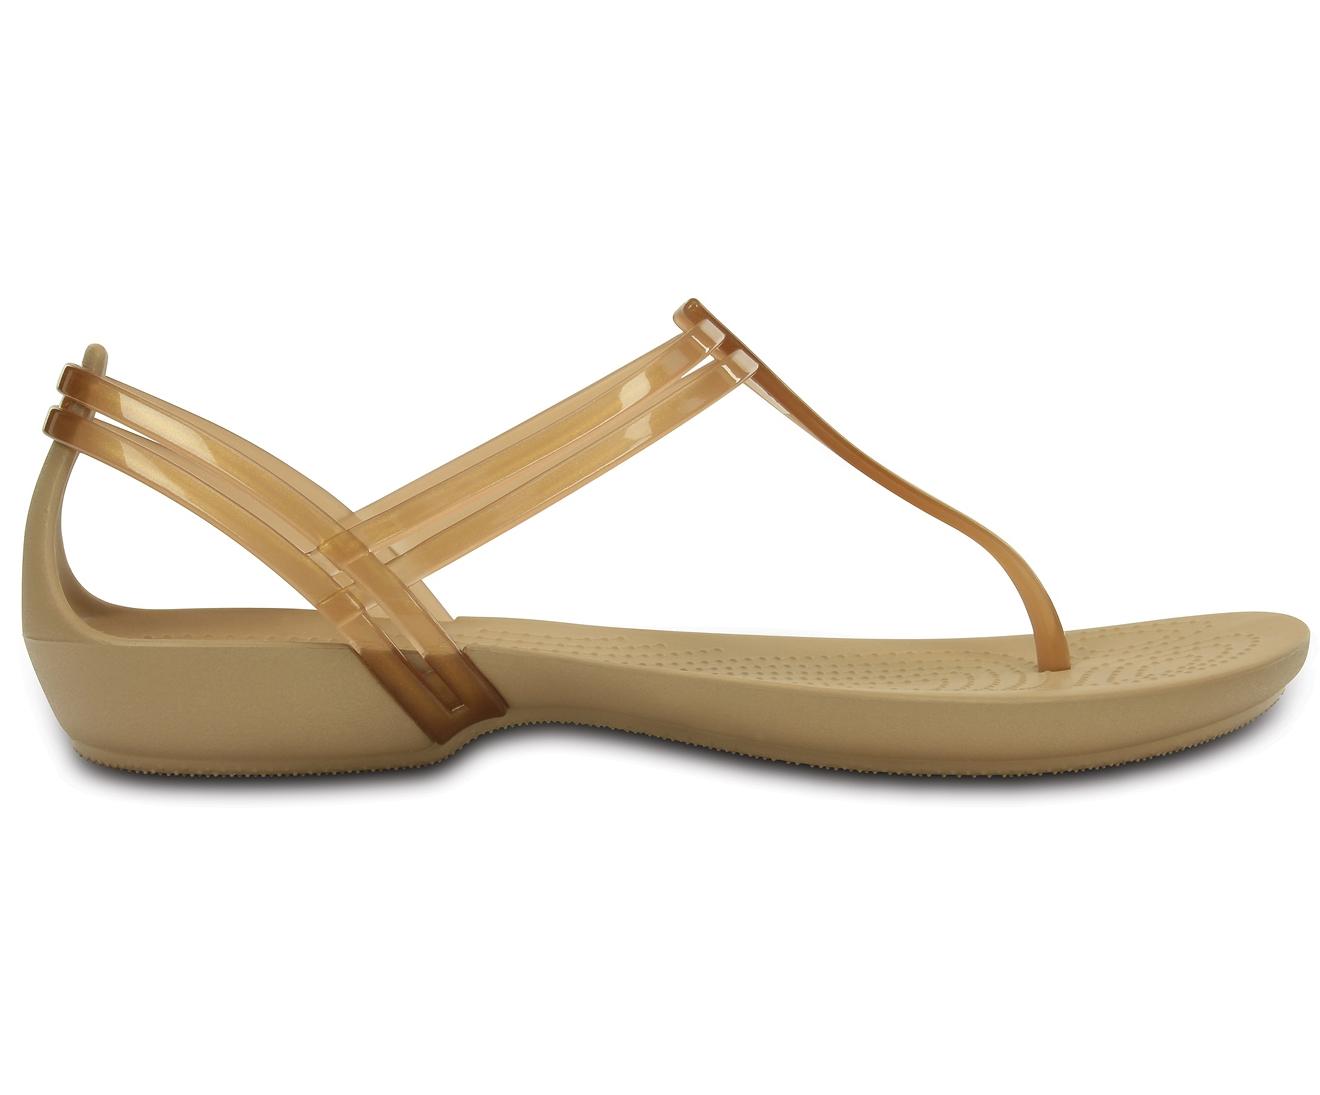 New Women's Crocs Isabella T-Strap Sandal Shoes SZ 6 7 8 9 10 